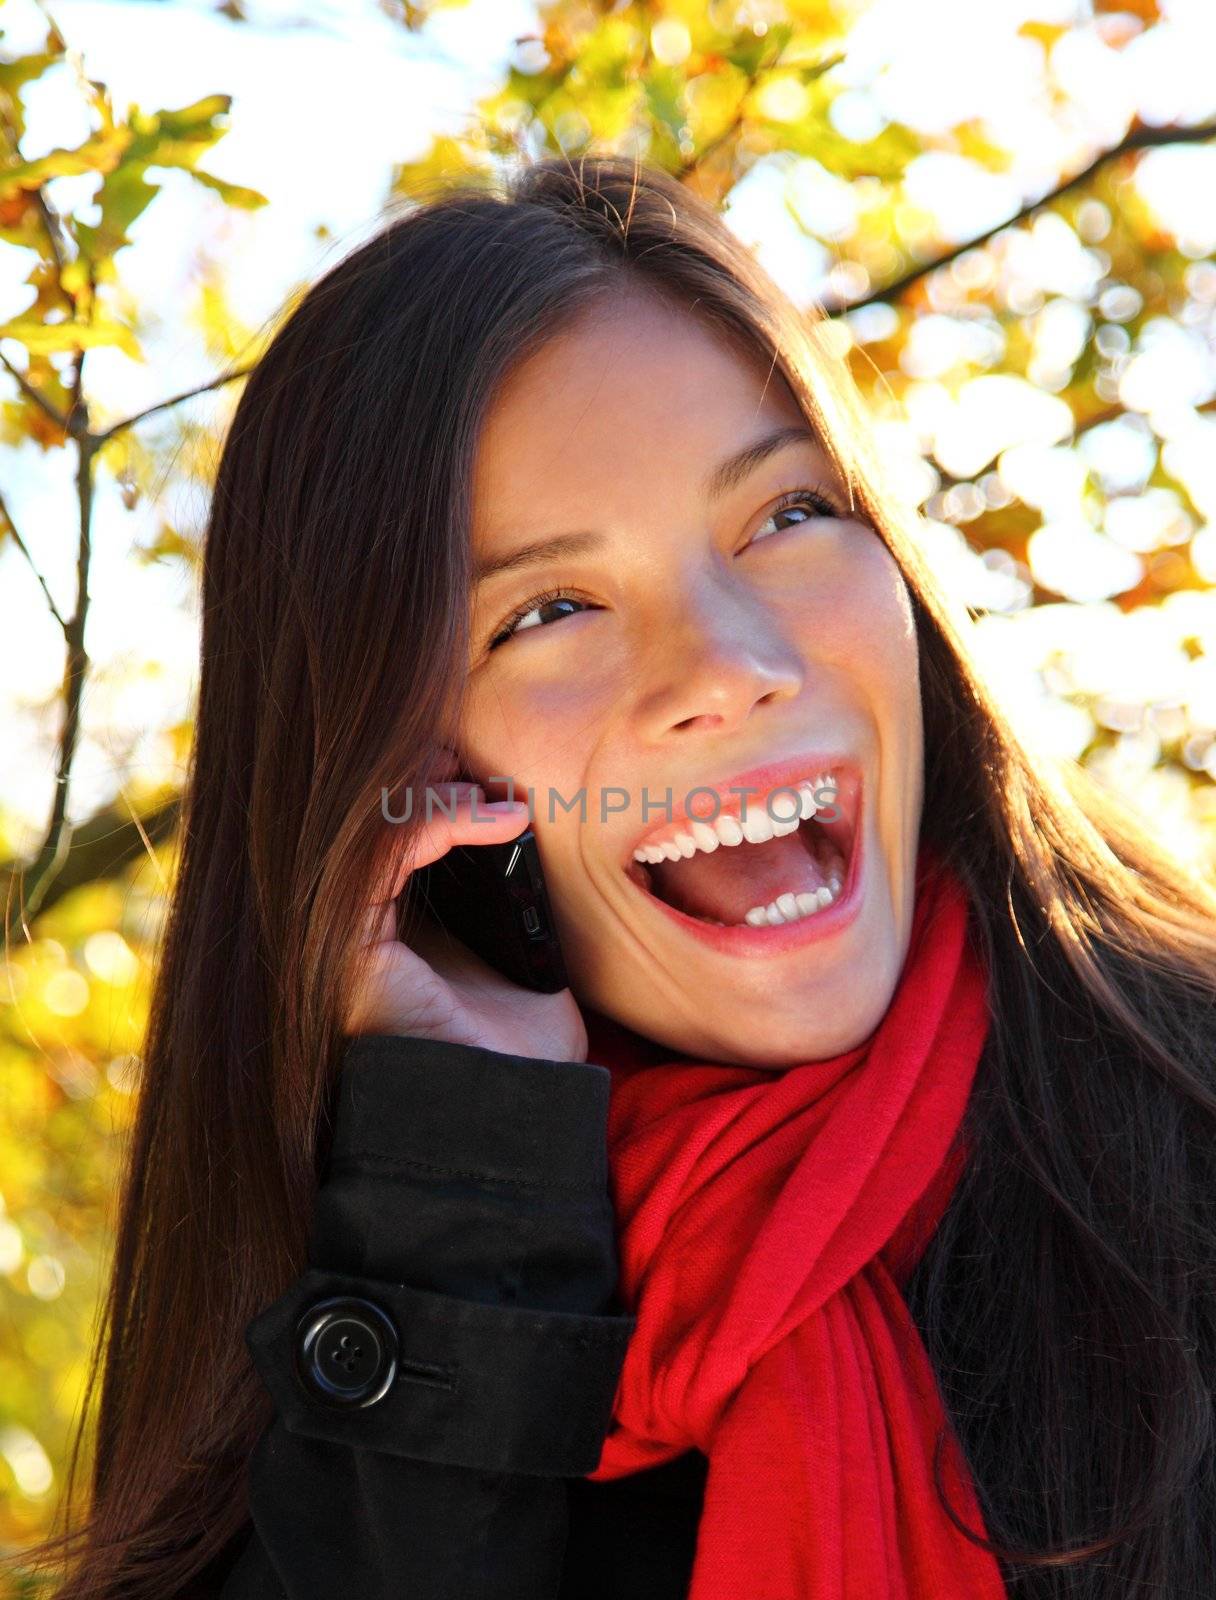 Phone woman outdoors by Maridav